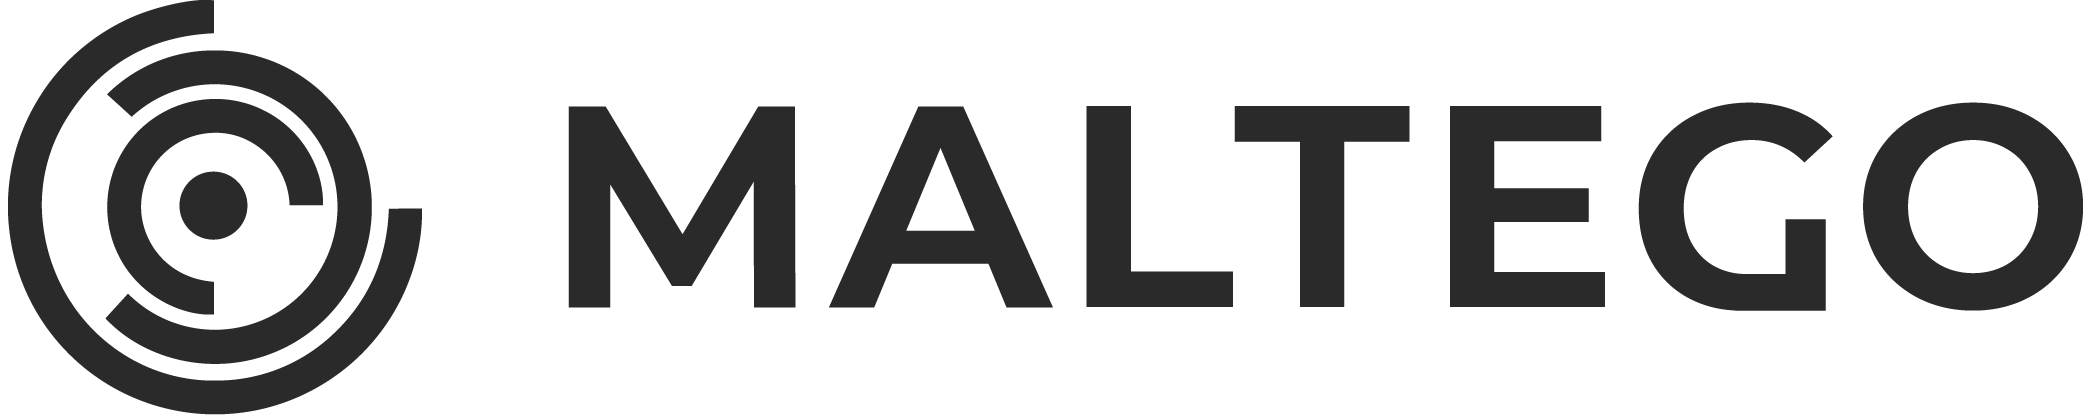 maltego-logo icon